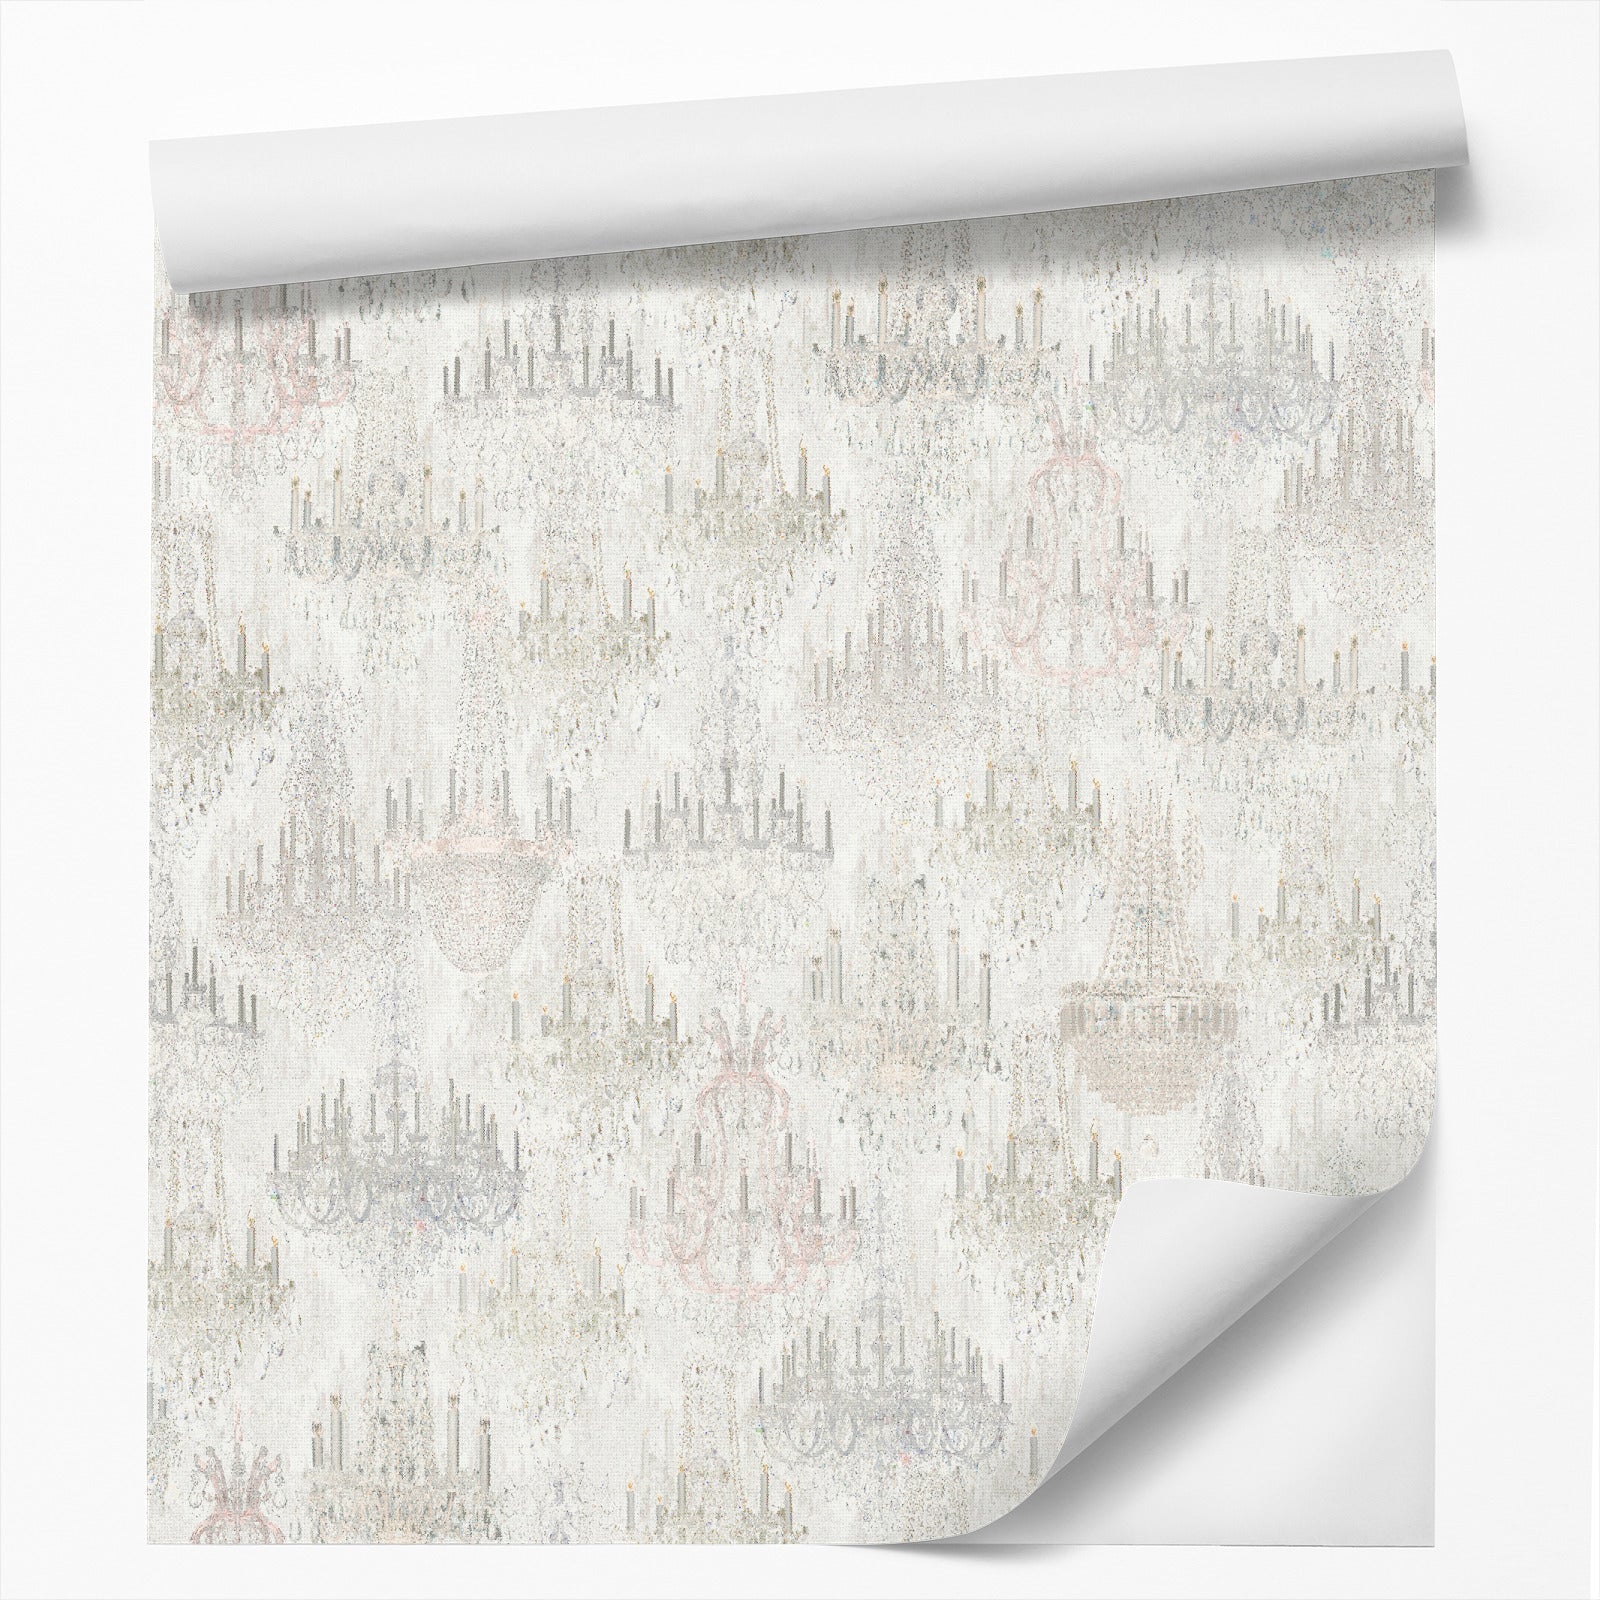 18' L x 24" W Peel & Stick Wallpaper Roll - Crystal Ch&elier by DecoWorks - Wallpaper - Americanflat